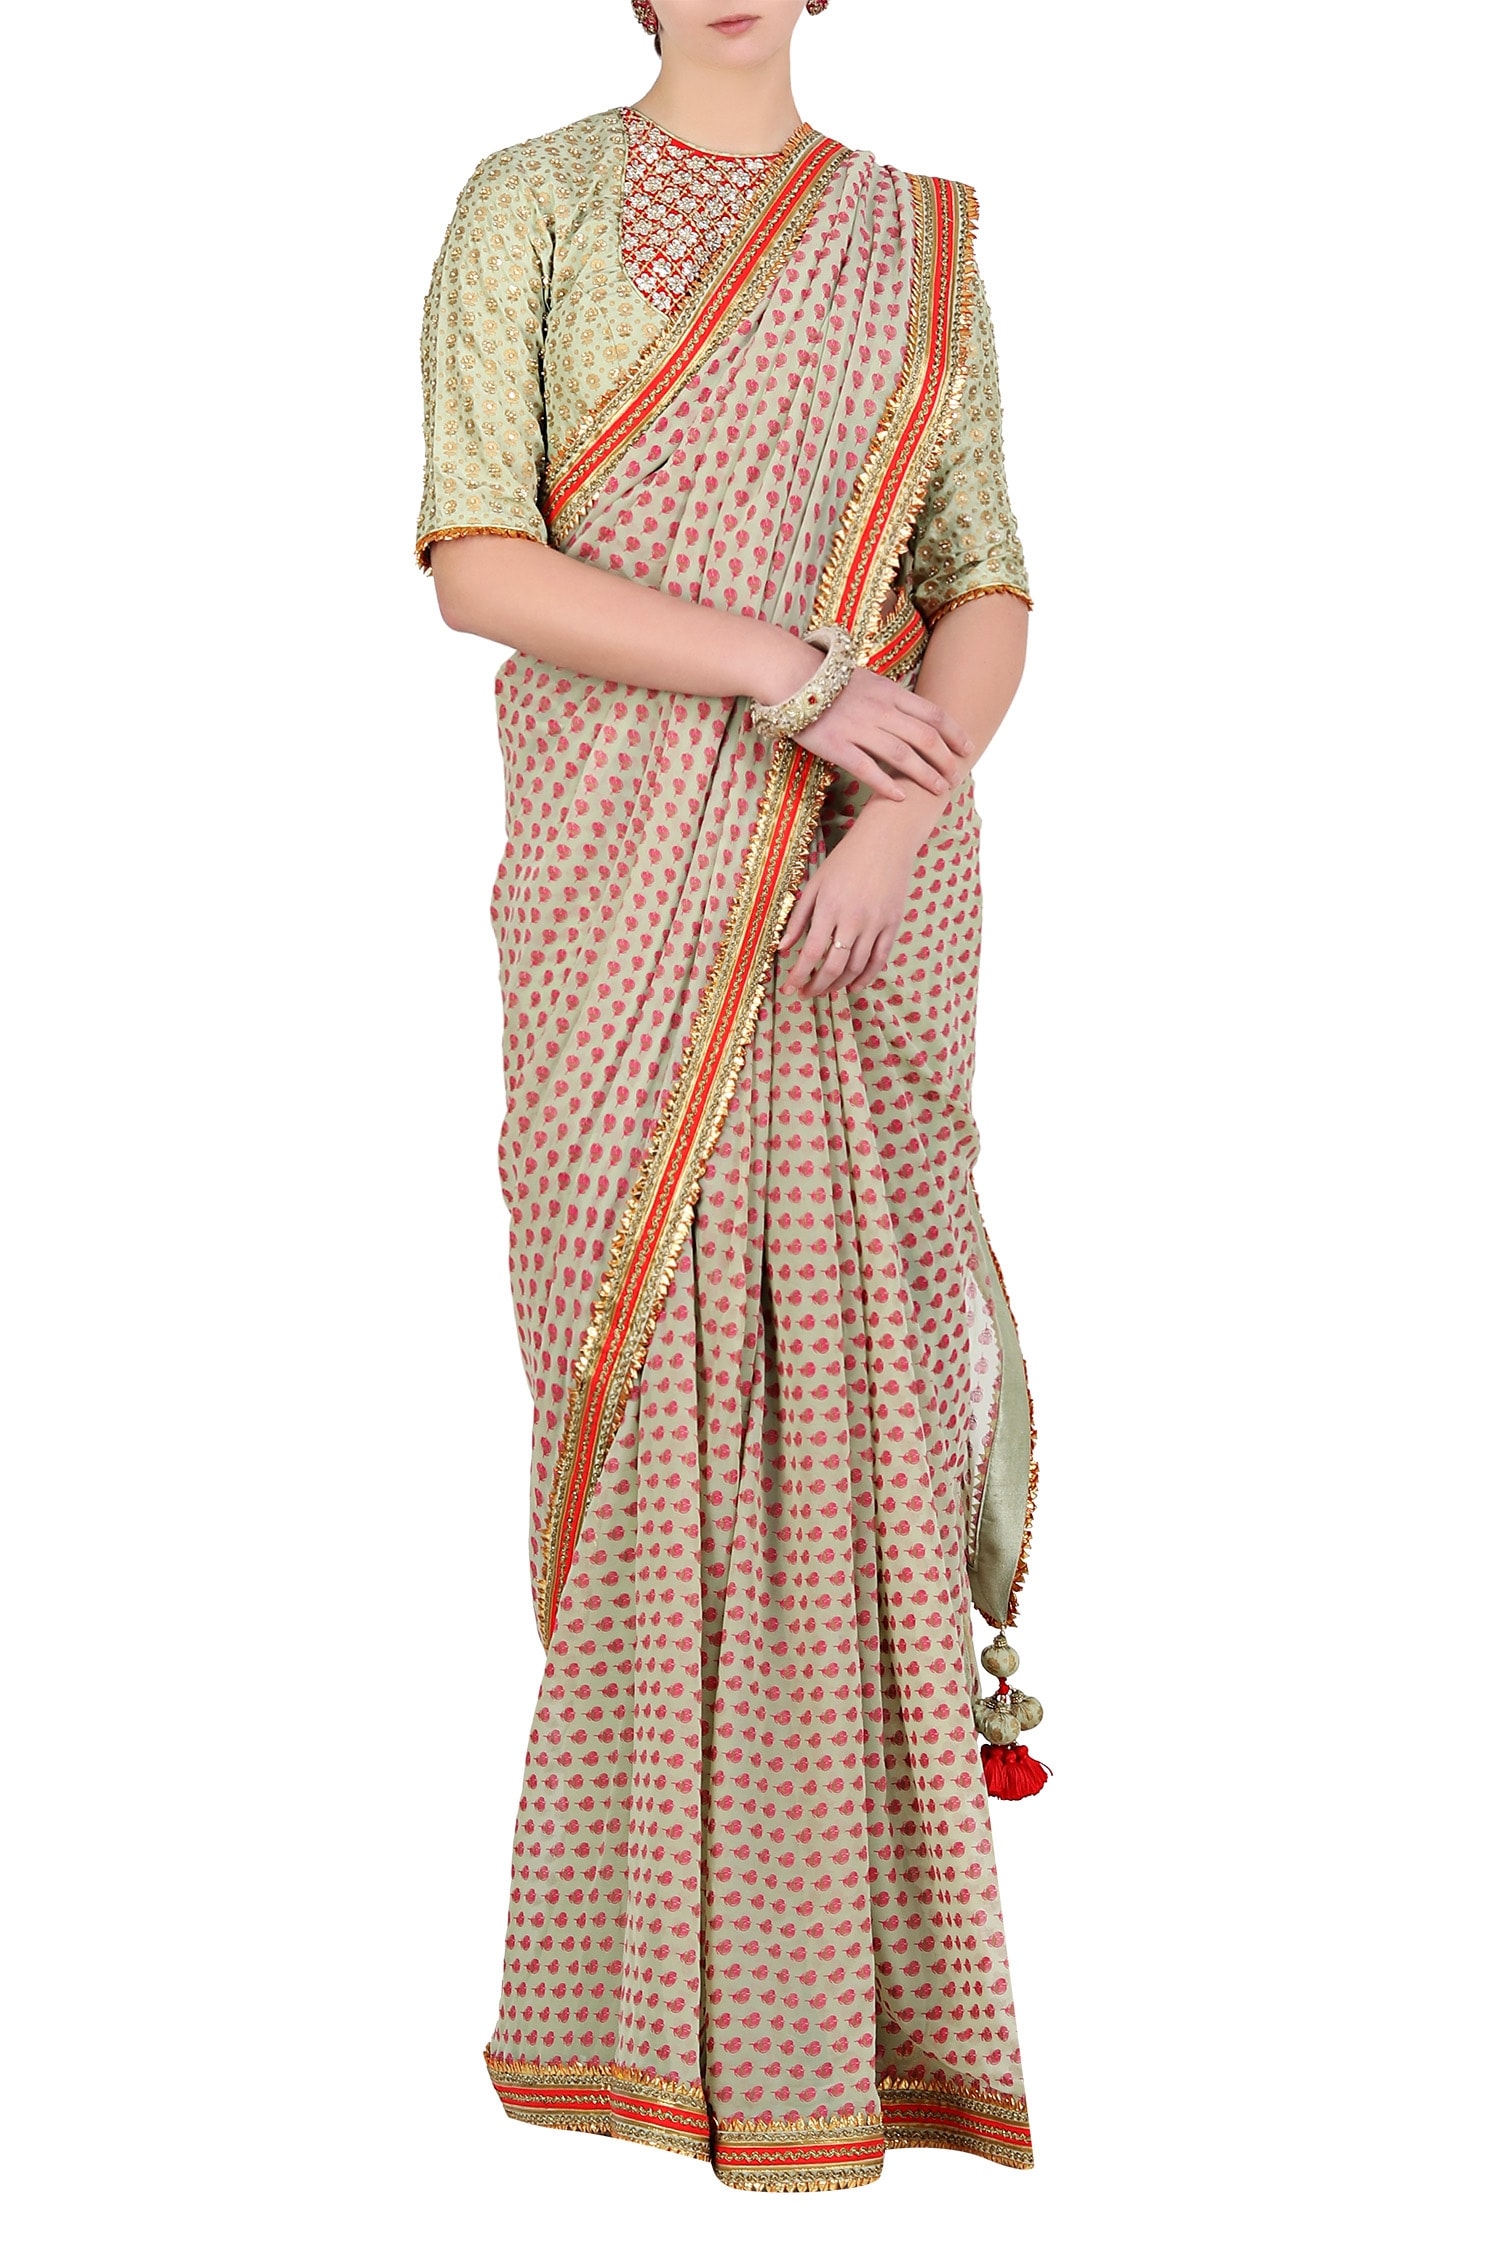 Nikasha Green Round Printed Saree With Blouse For Women